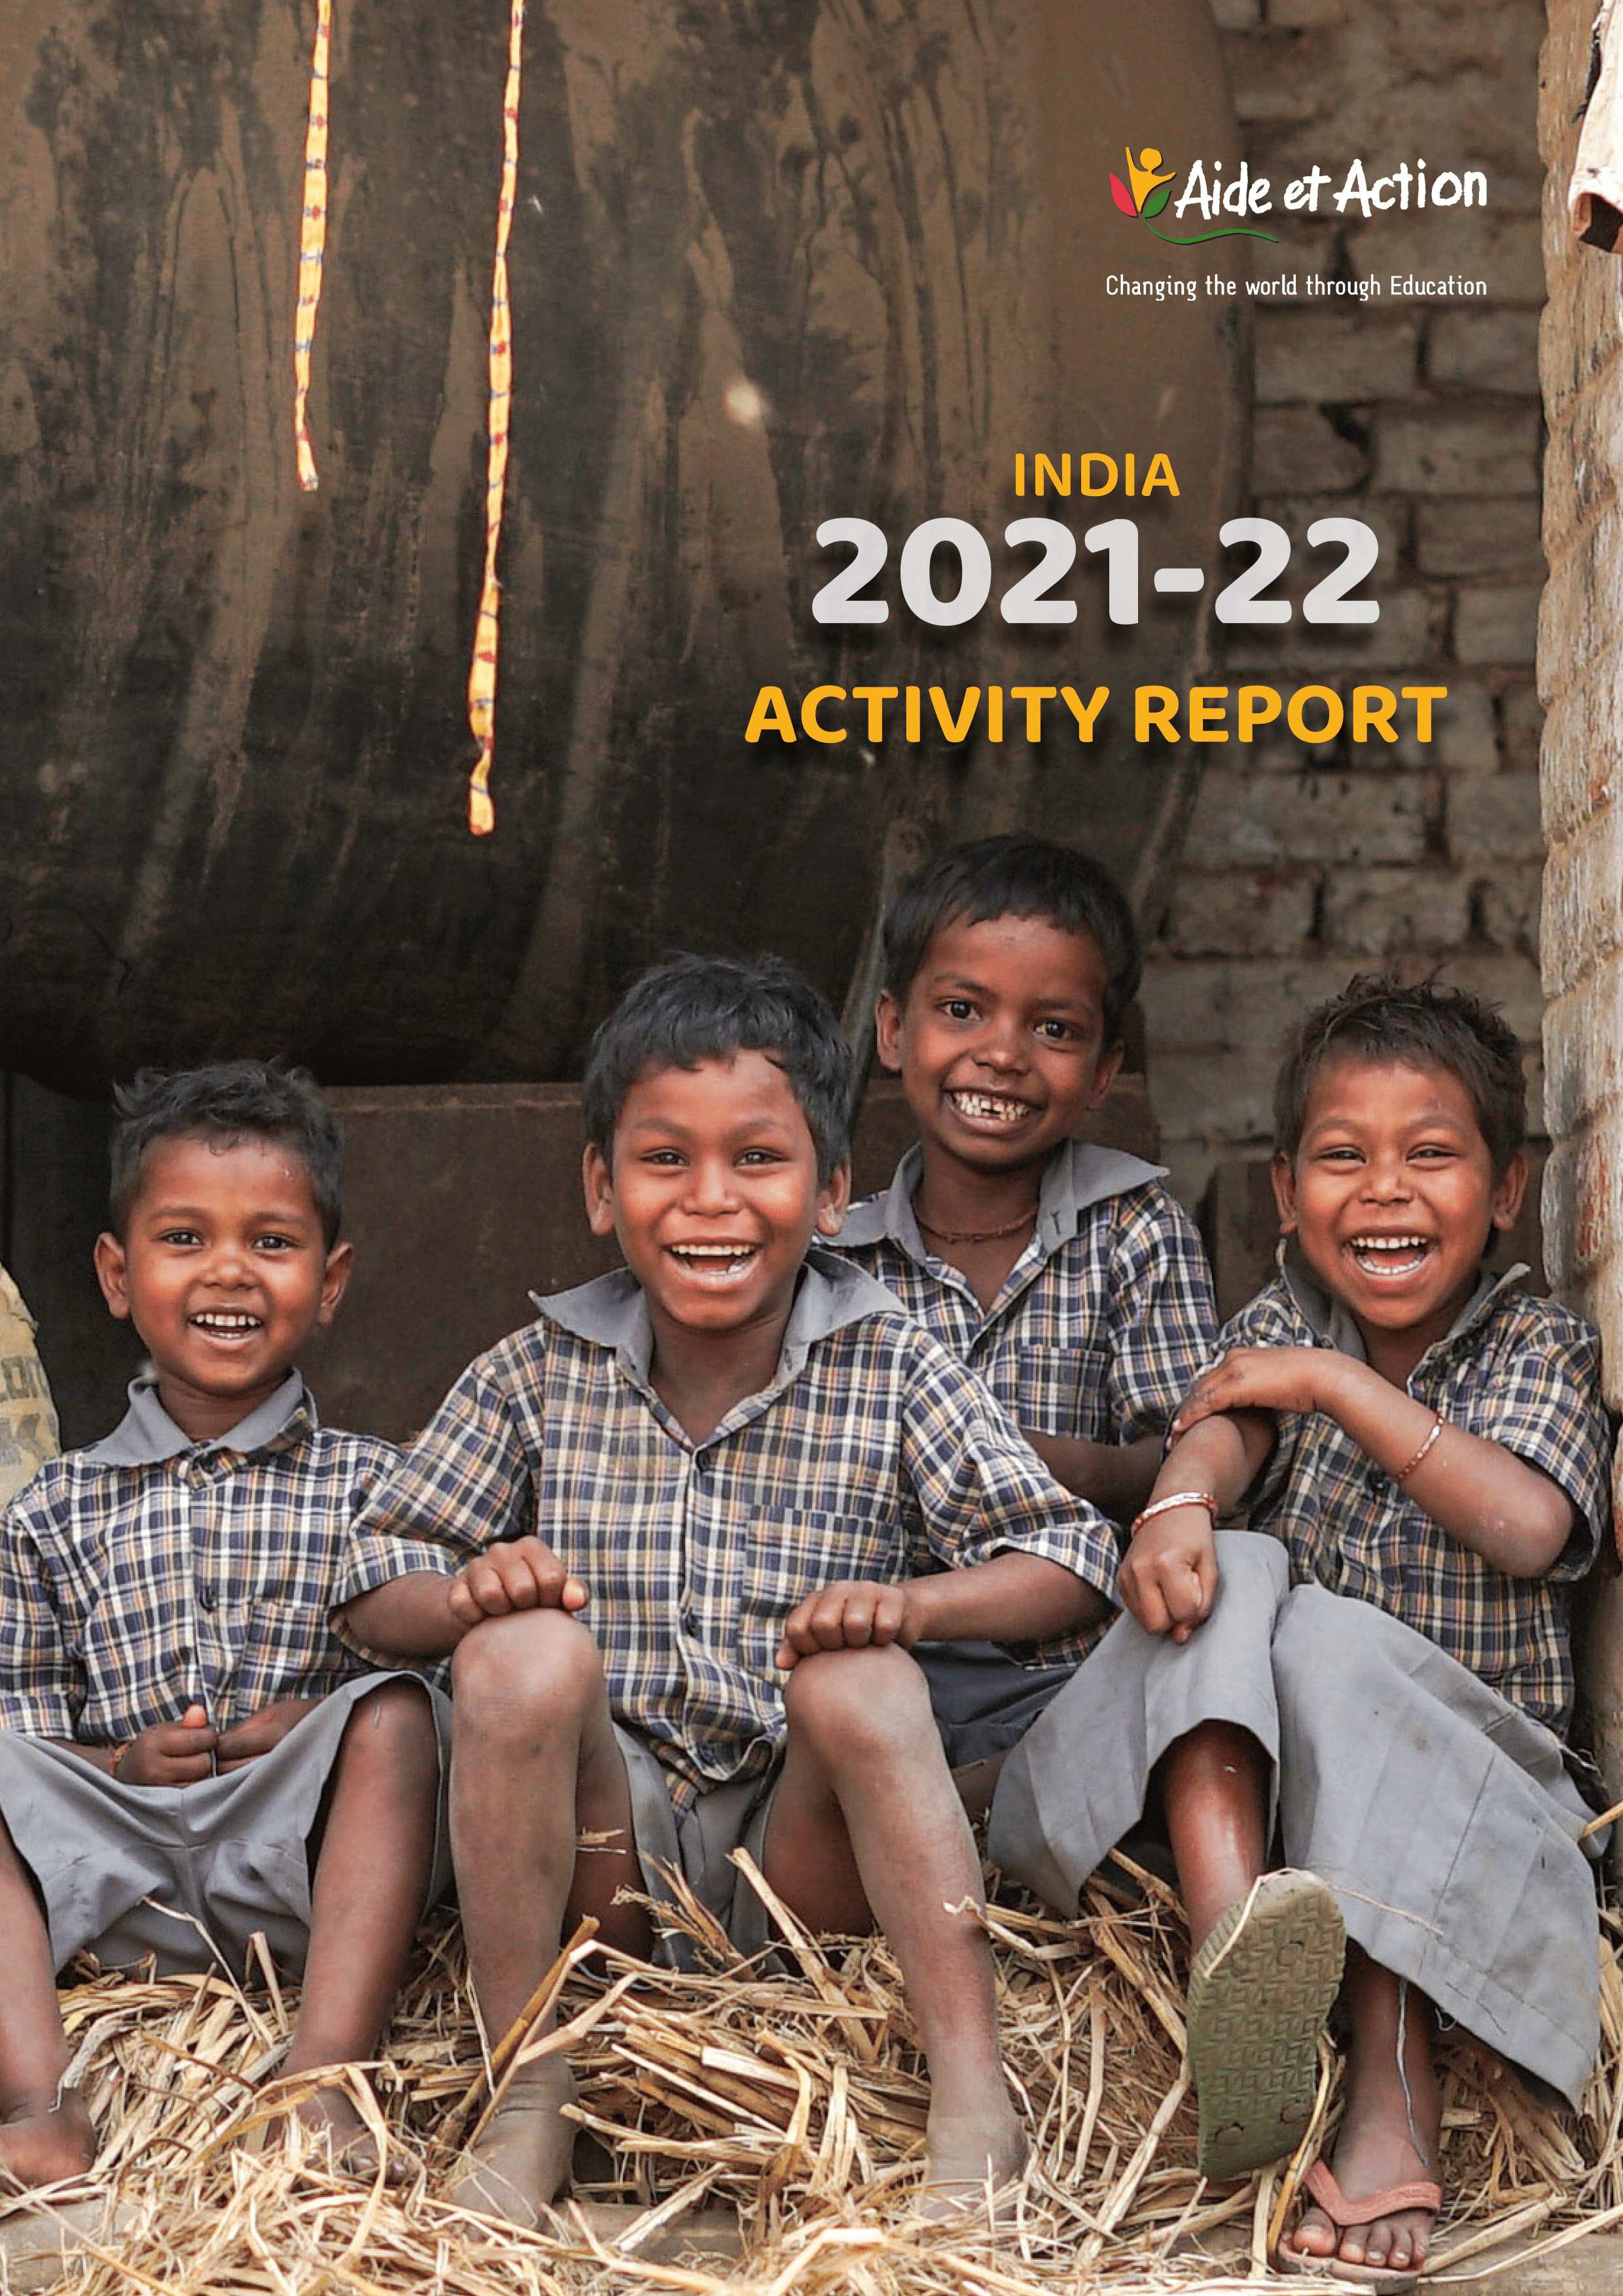 Aide et Action India Activity Report 2021-22